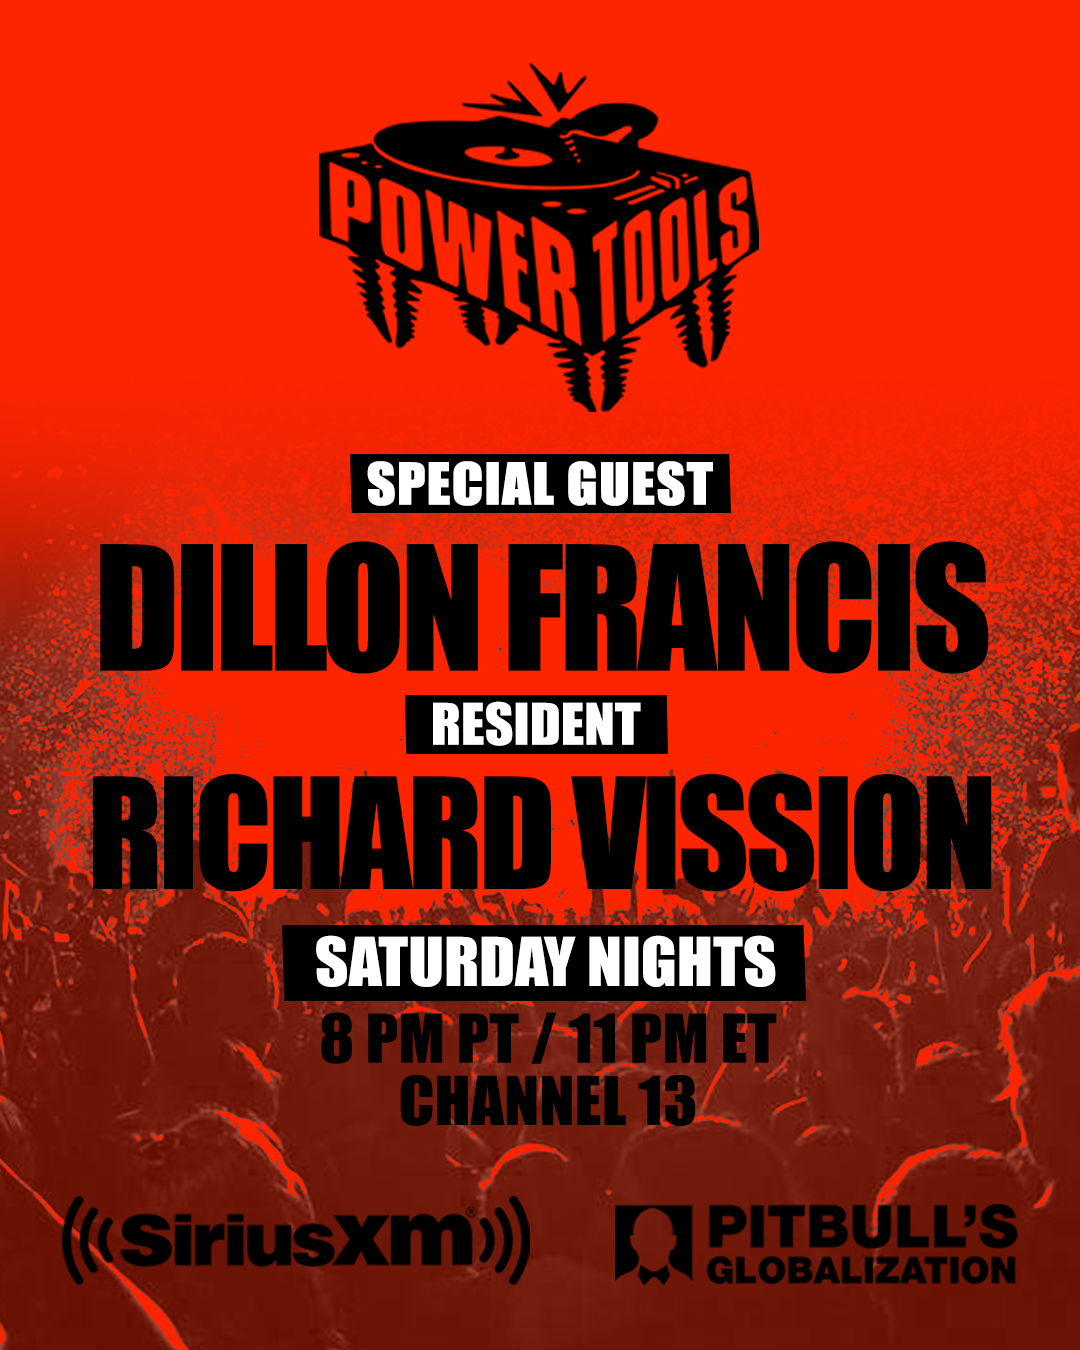 Episode 78: Powertools ft: Dillon Francis and Richard Vission